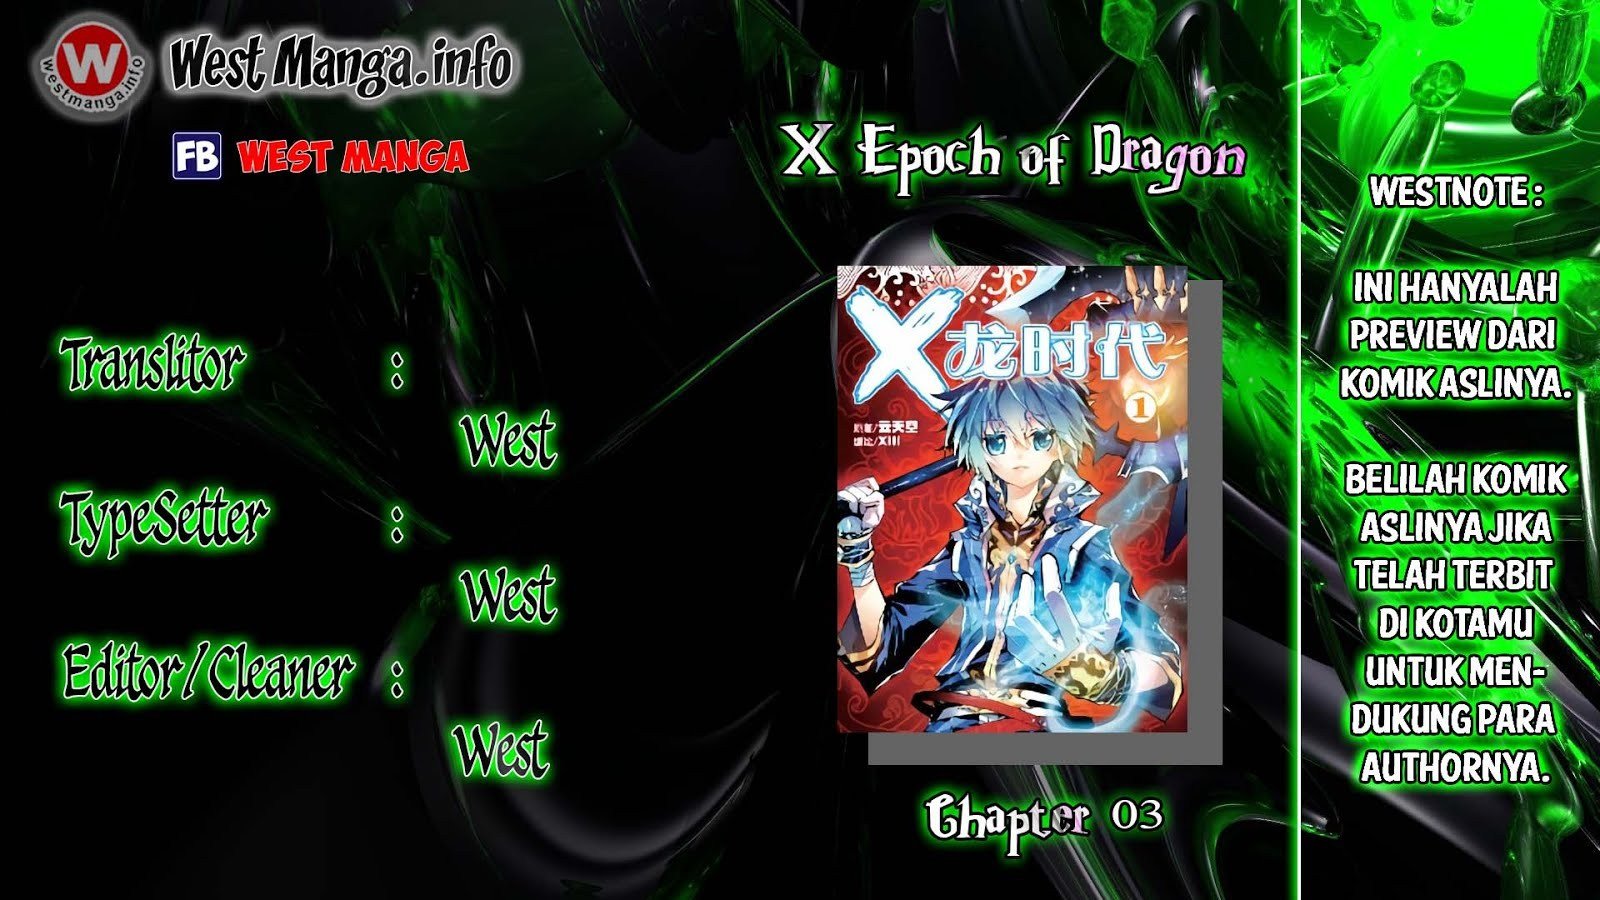 X Epoch of Dragon Chapter 03